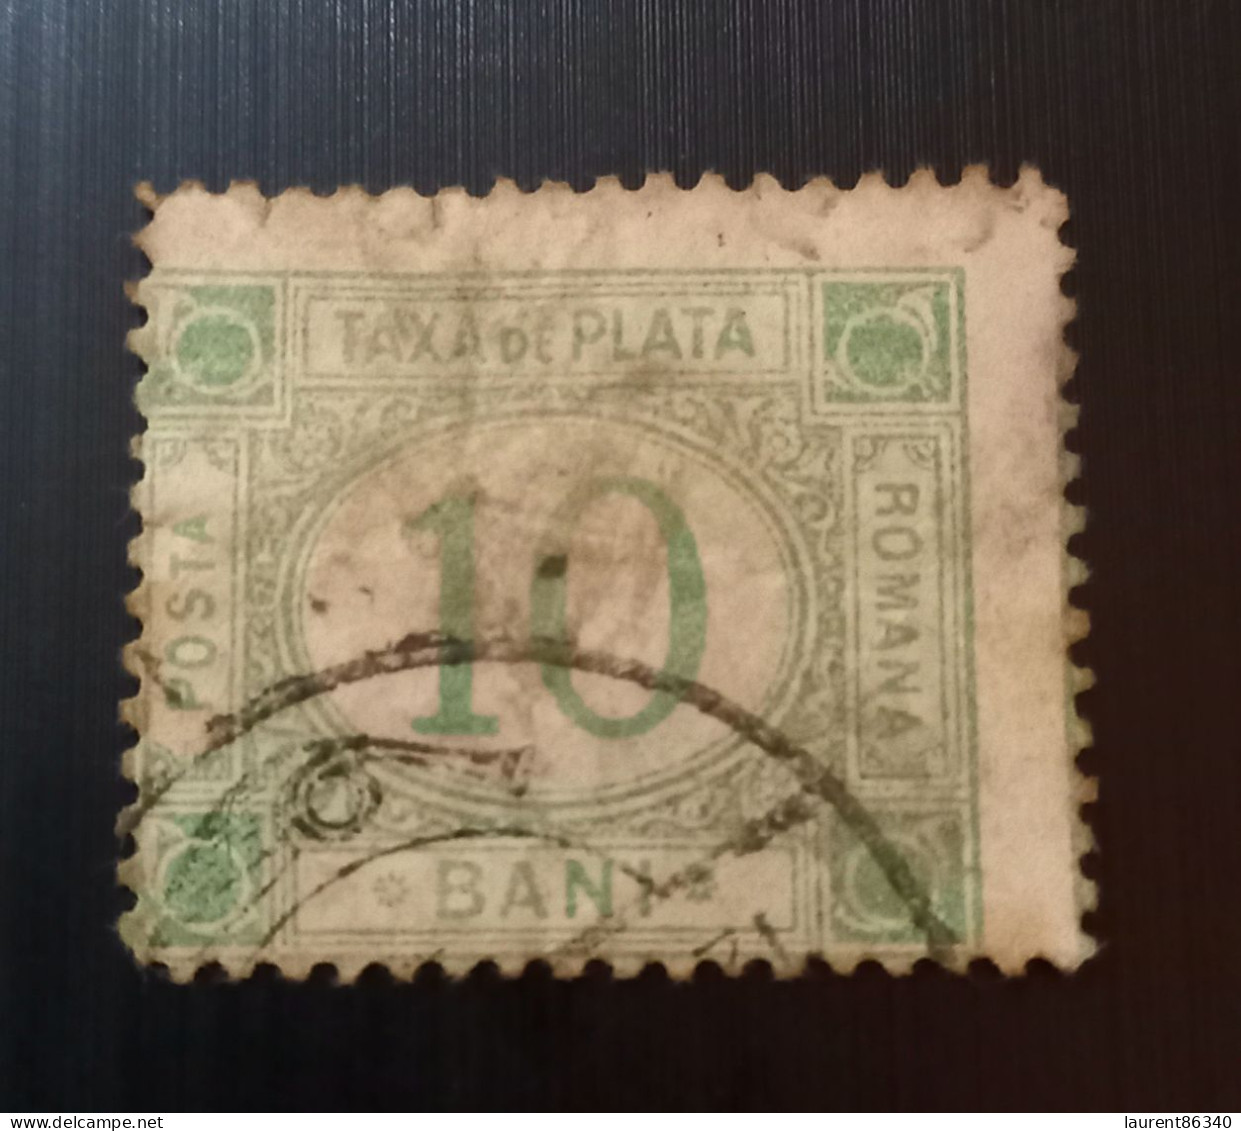 Roumanie 1890 Postage Due Stamps - Yellowish Paper - Gebruikt